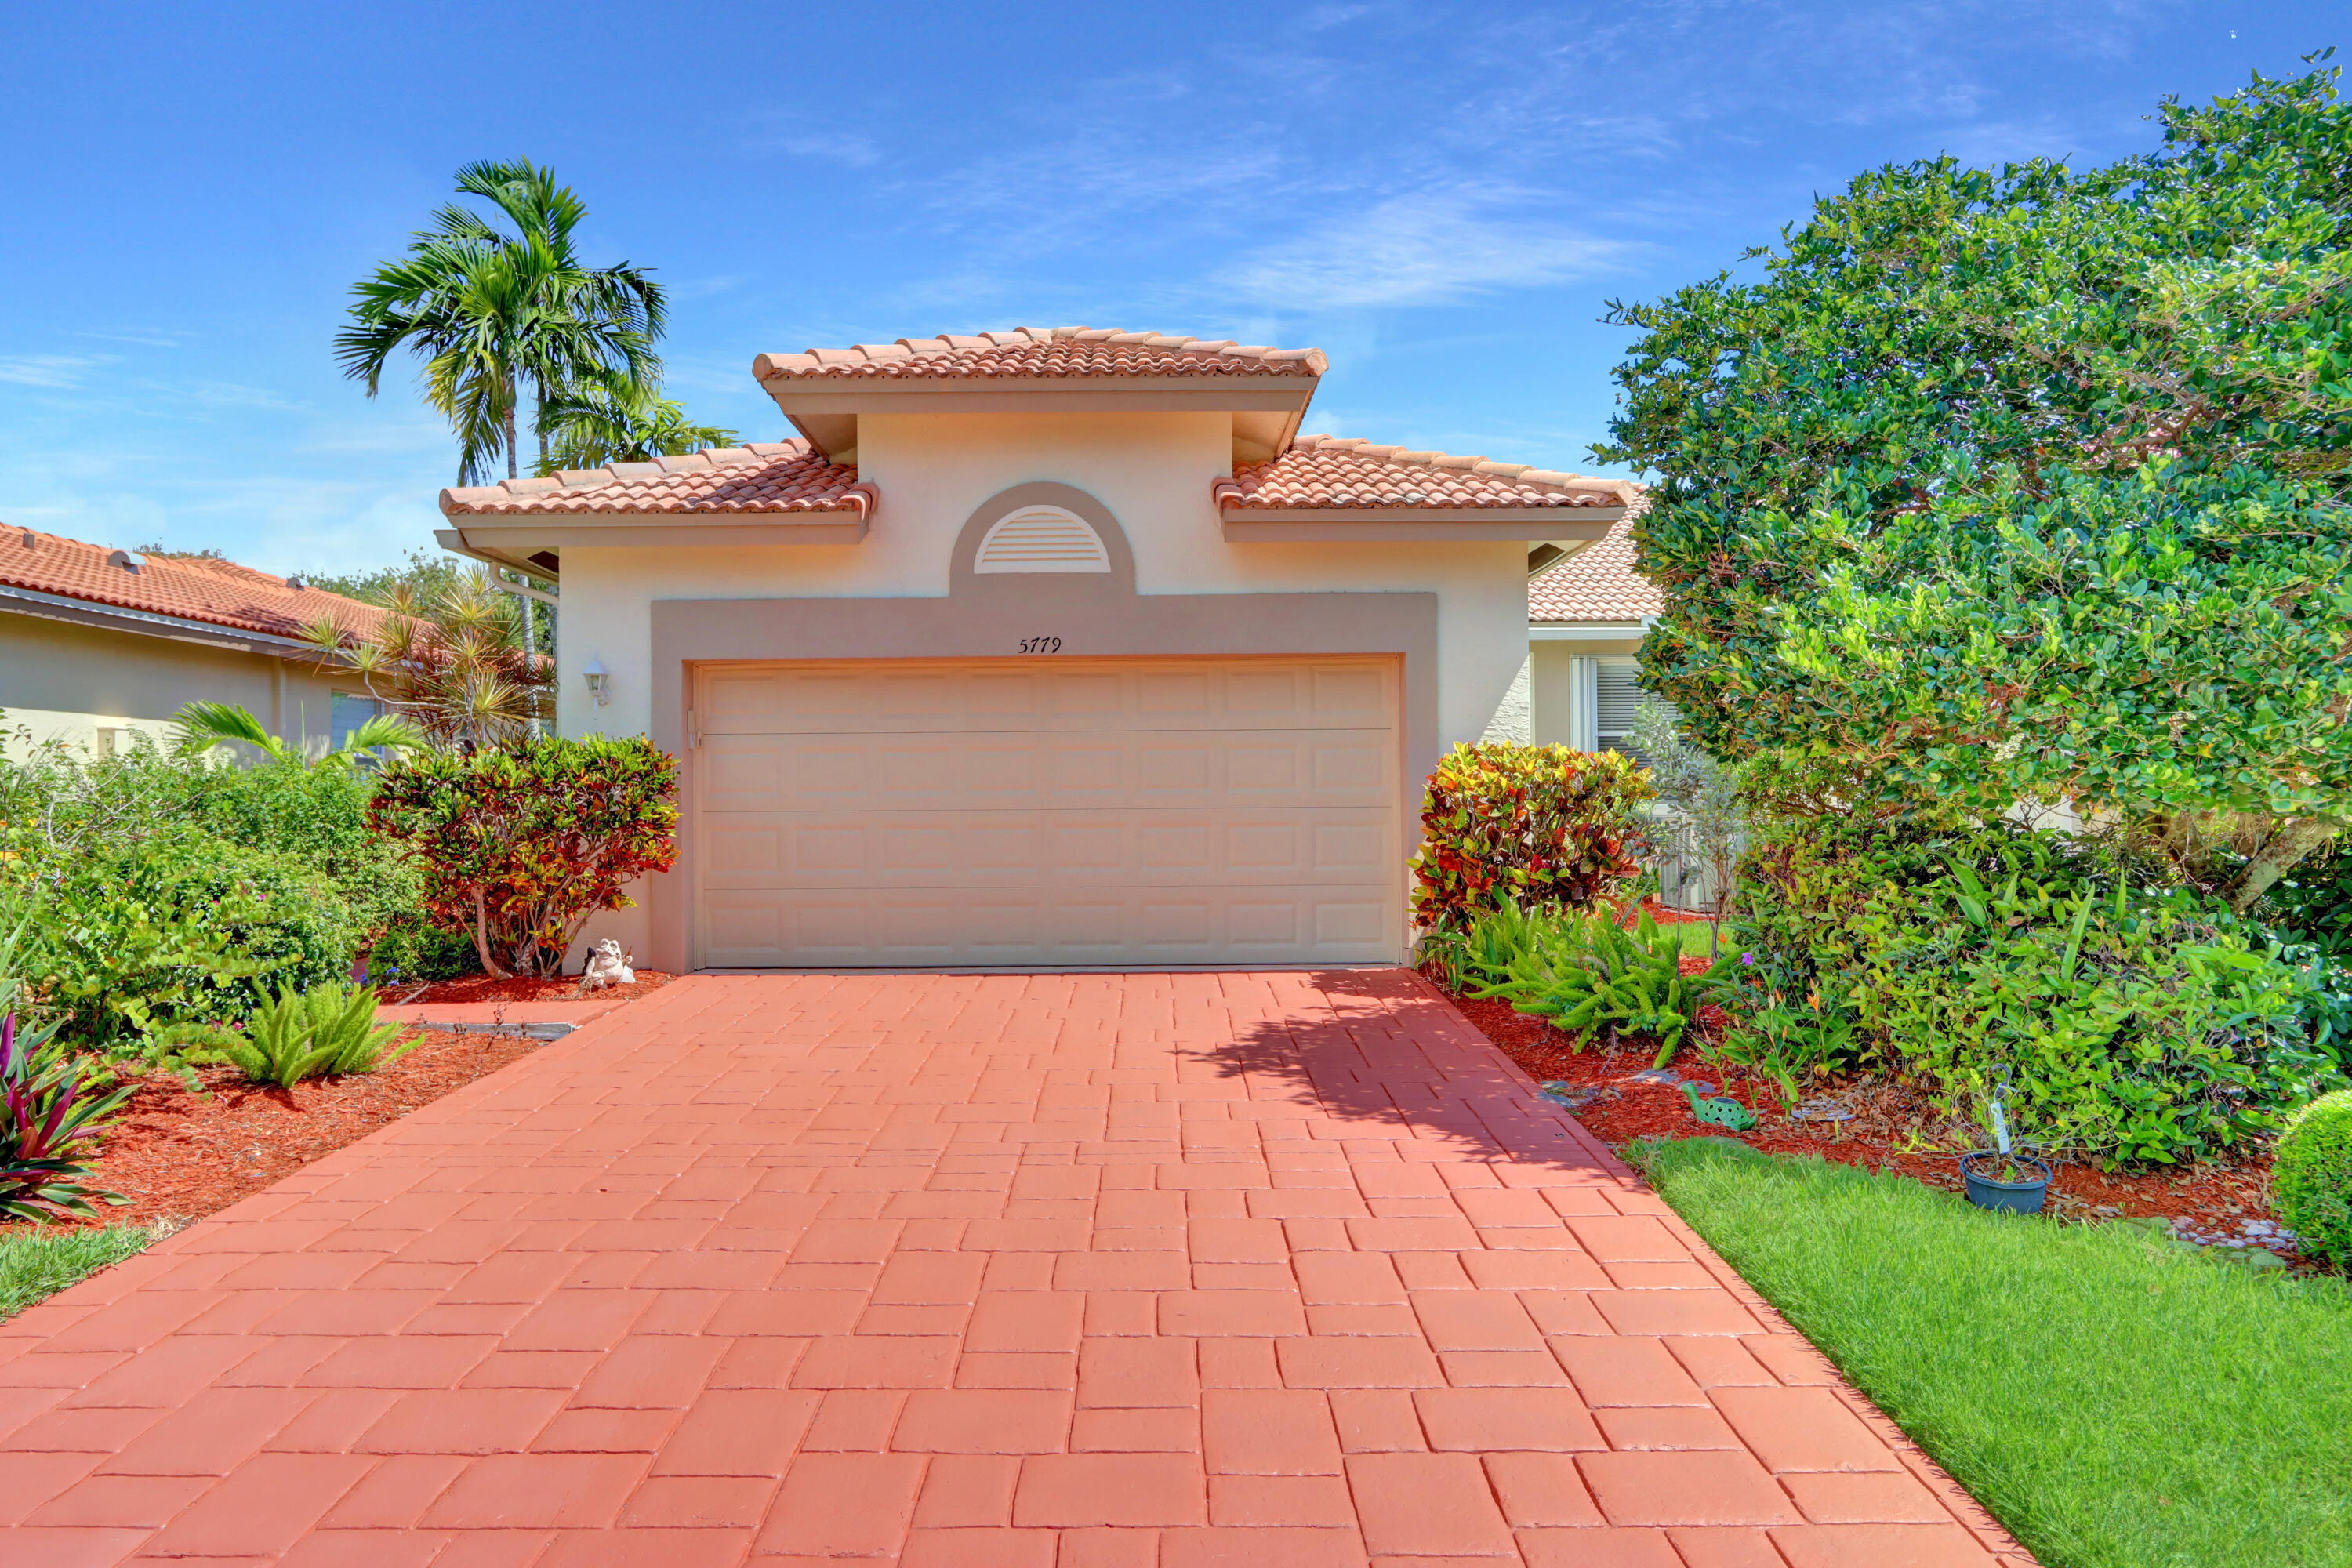 Property for Sale at 5779 Grand Harbour Circle, Boynton Beach, Palm Beach County, Florida - Bedrooms: 3 
Bathrooms: 2  - $445,000